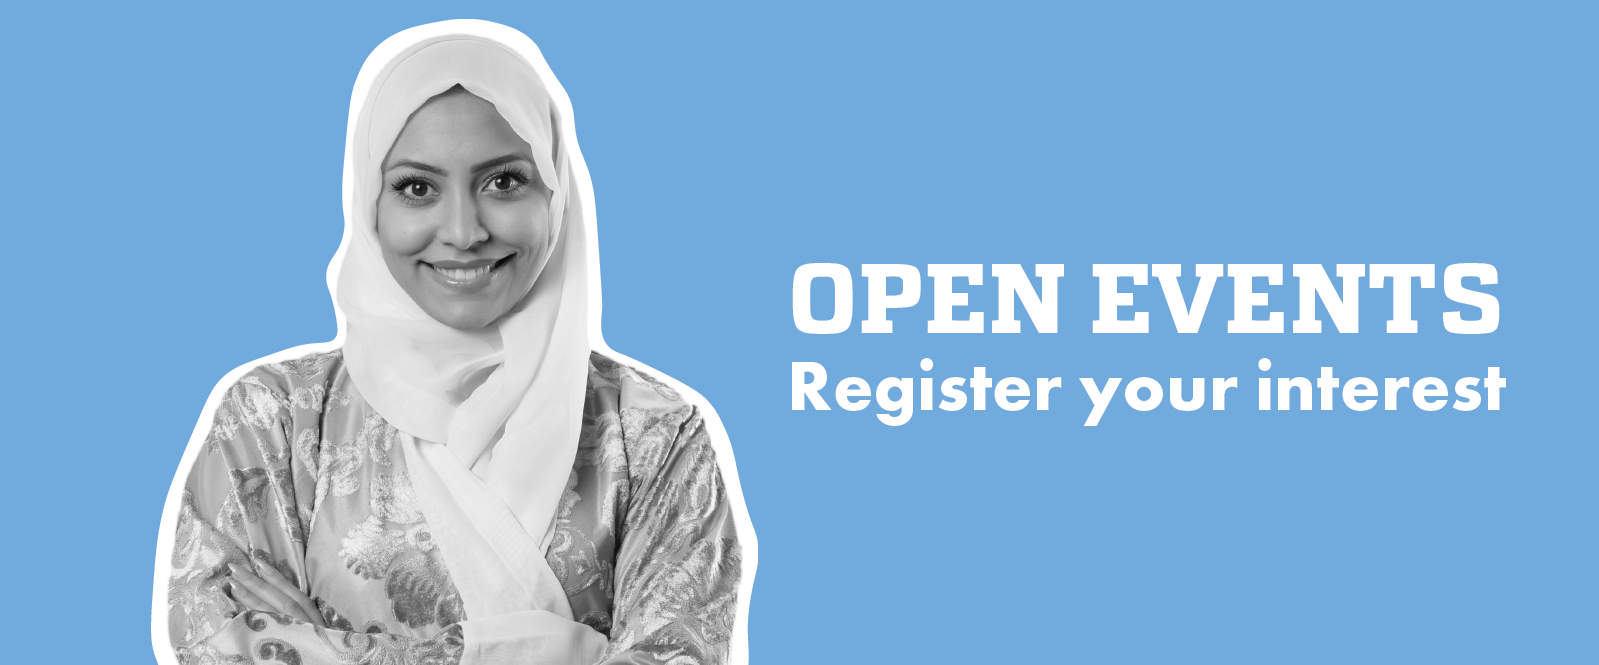 Open Event - Register your interest